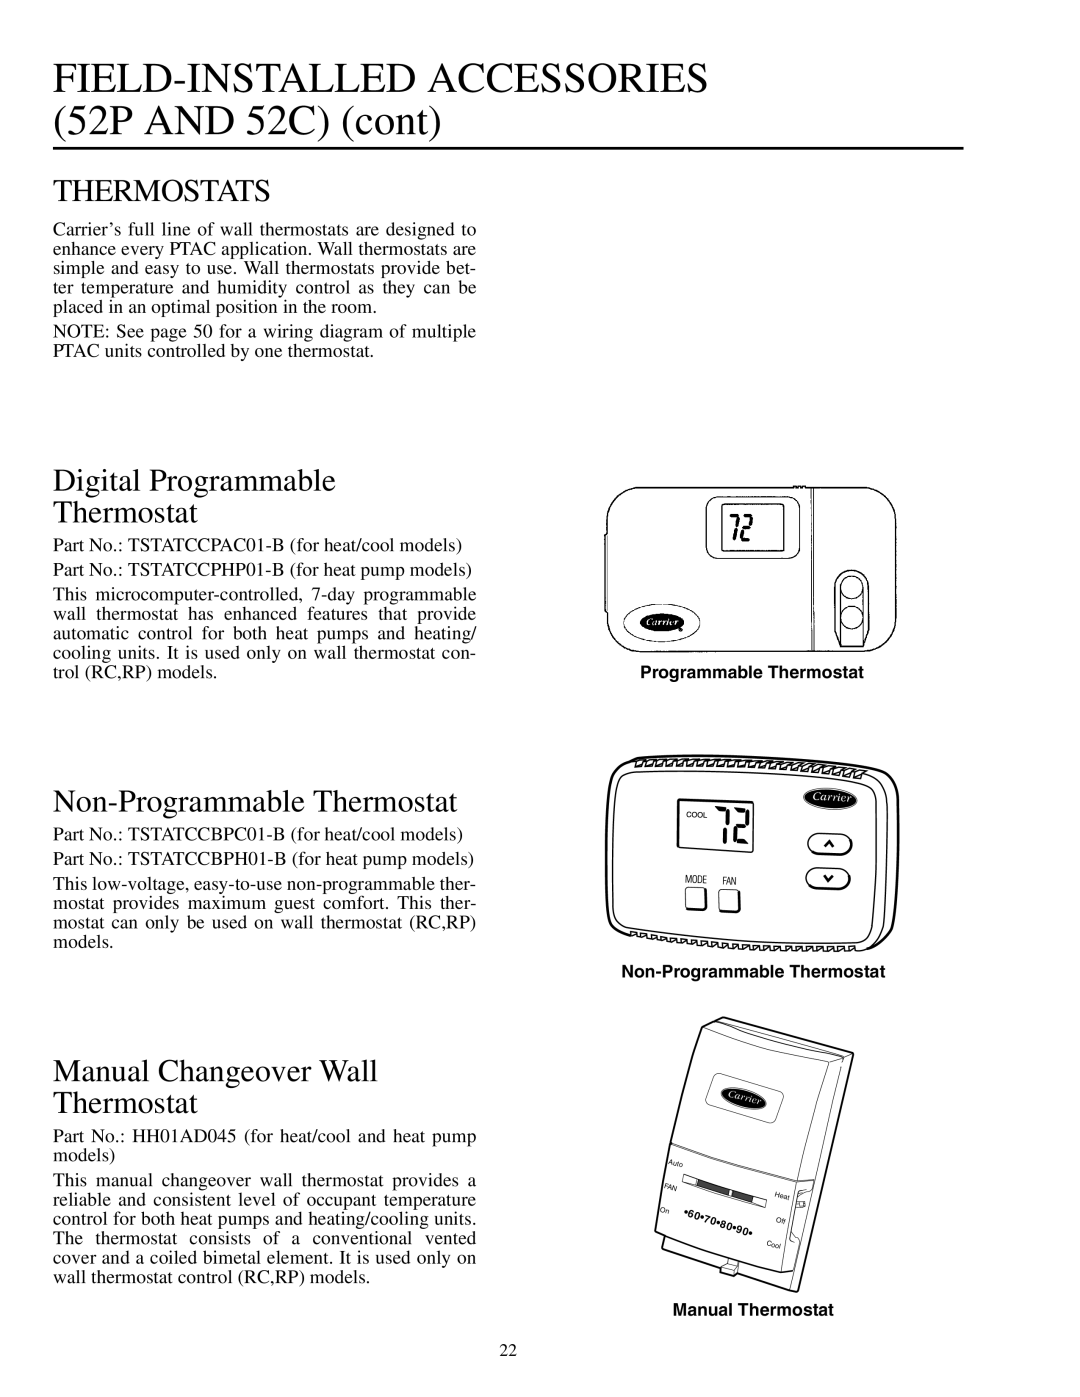 Carrier 592-085 warranty Thermostats, Digital Programmable Thermostat, Non-ProgrammableThermostat, trol RC,RP models 